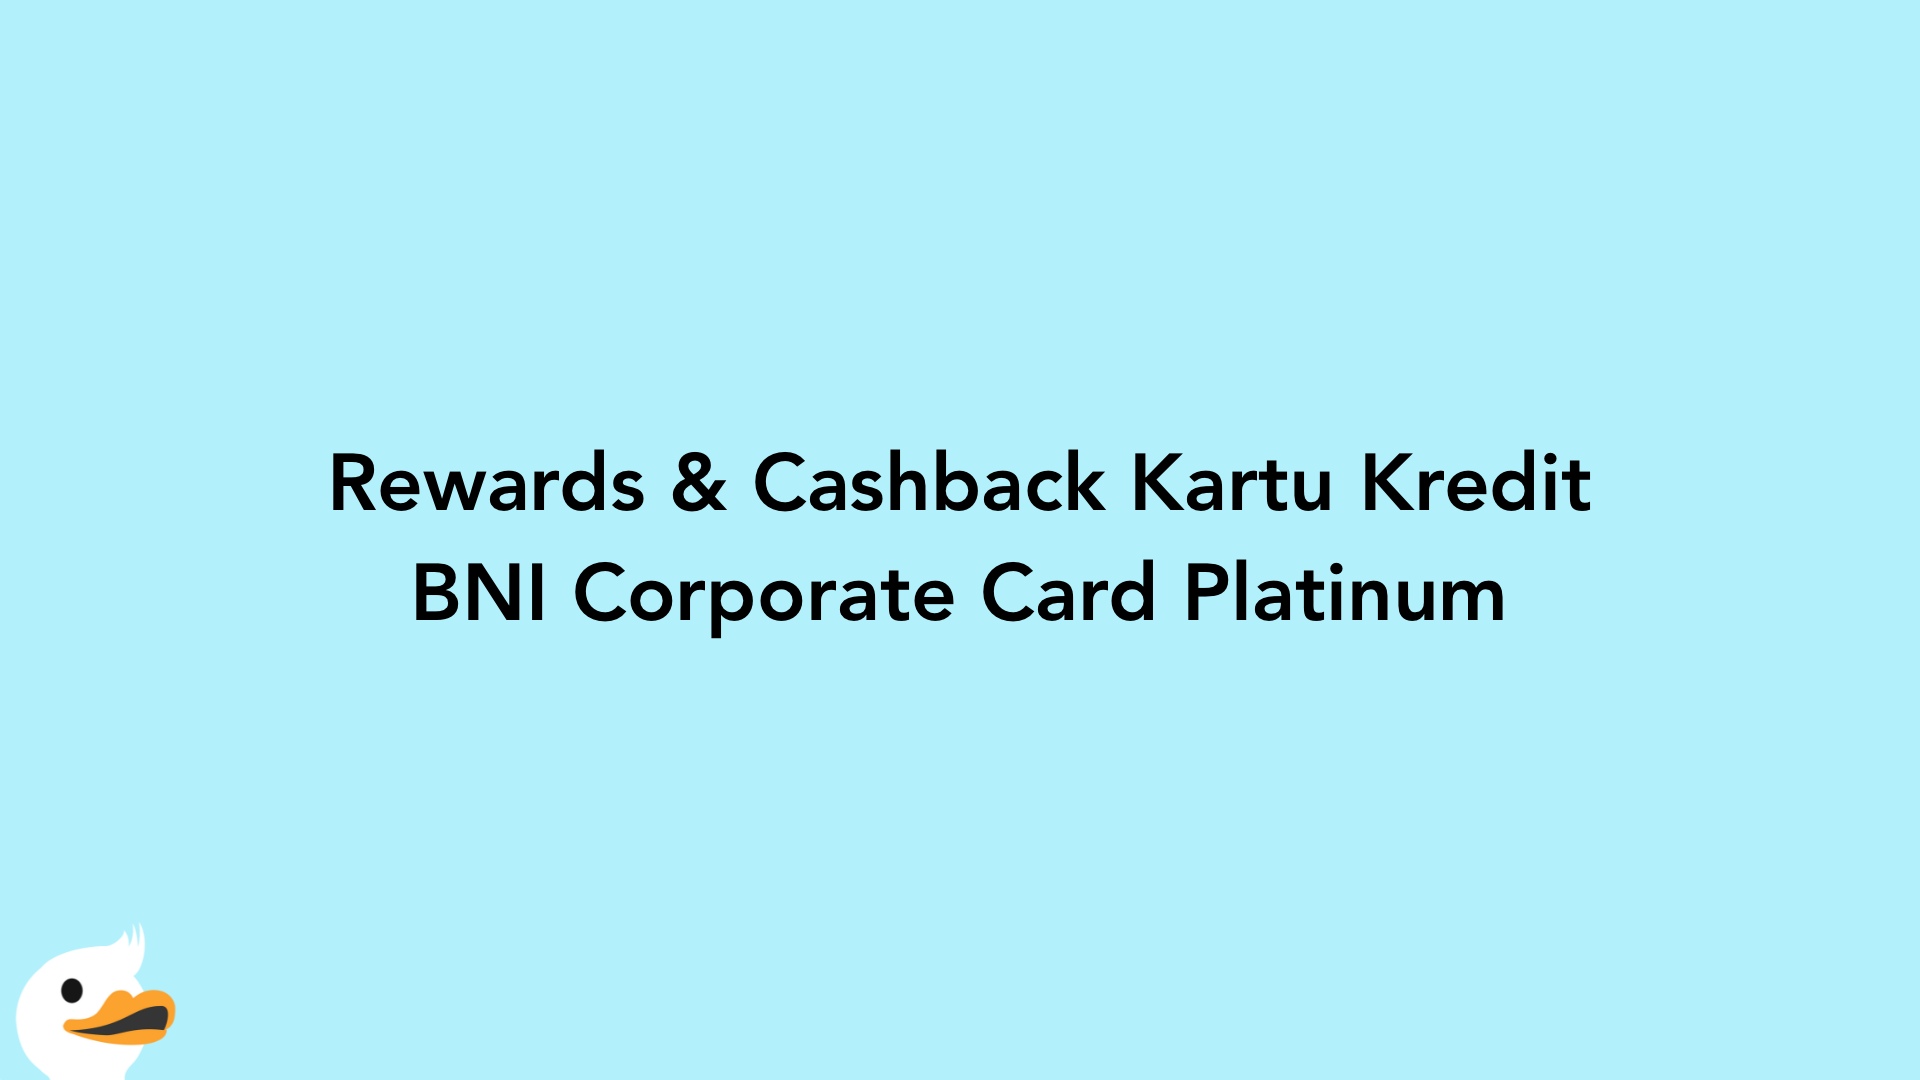 Rewards & Cashback Kartu Kredit BNI Corporate Card Platinum